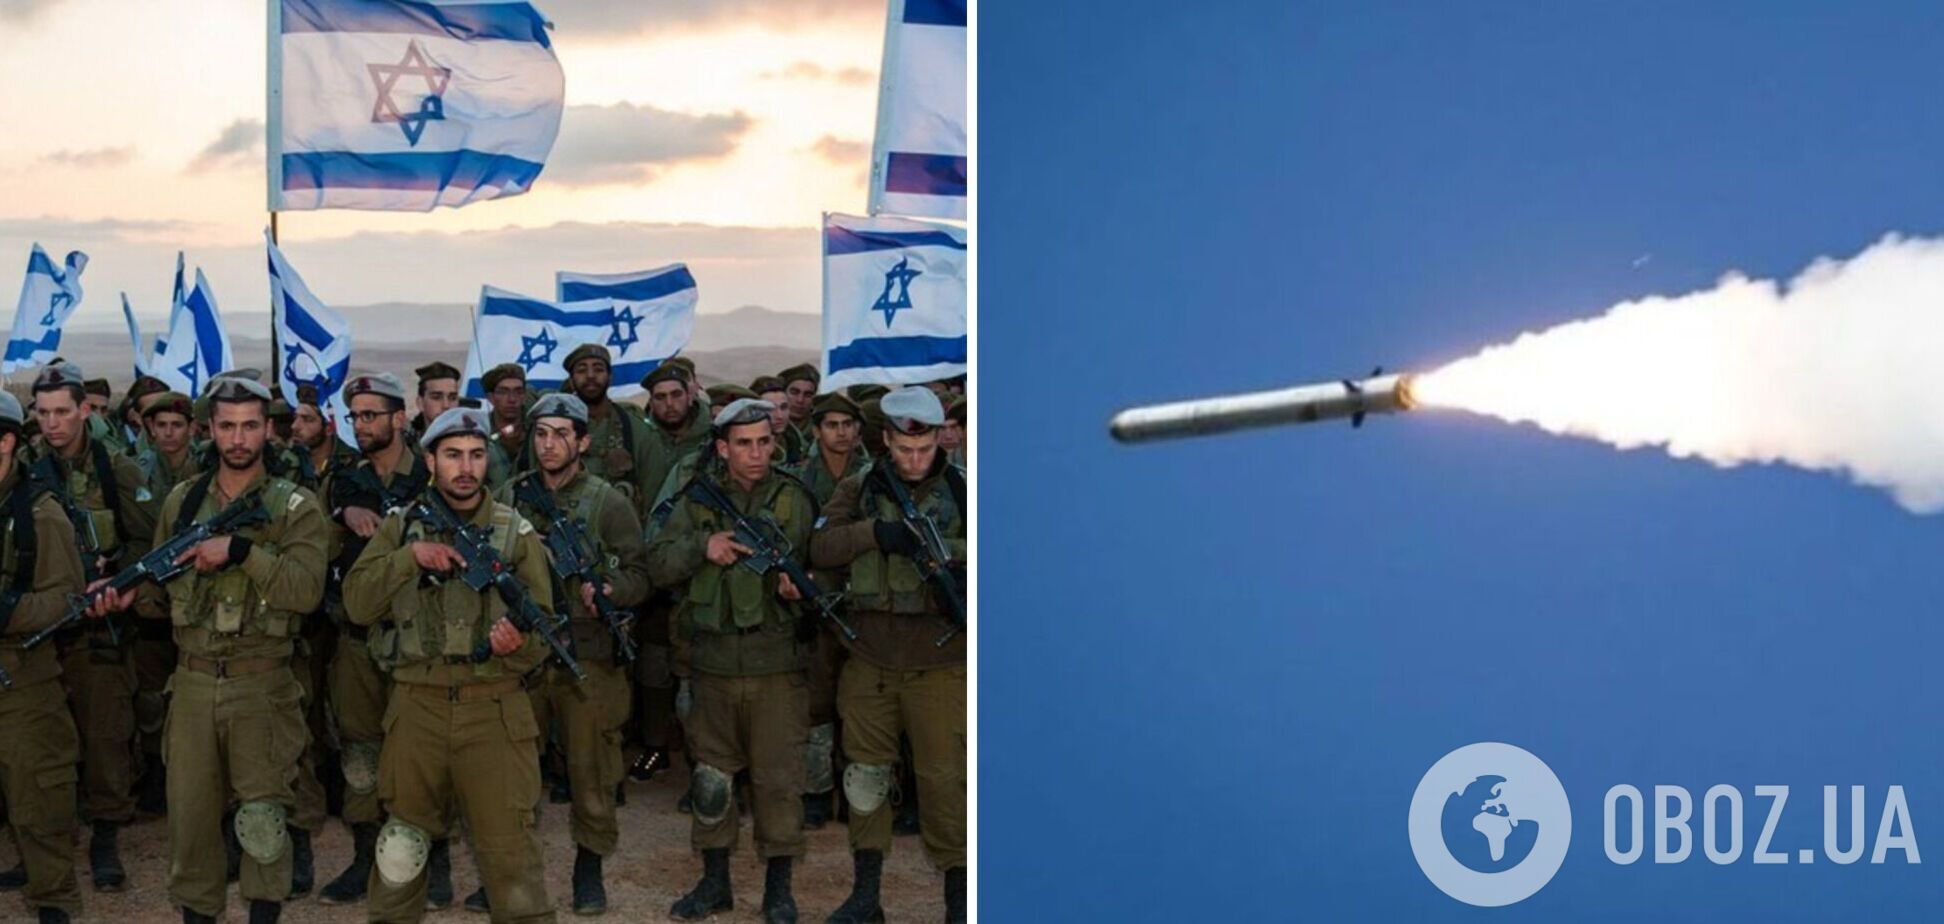 Израиль в ответ начал атаку объектов на территории Ирана и Ливана – СМИ